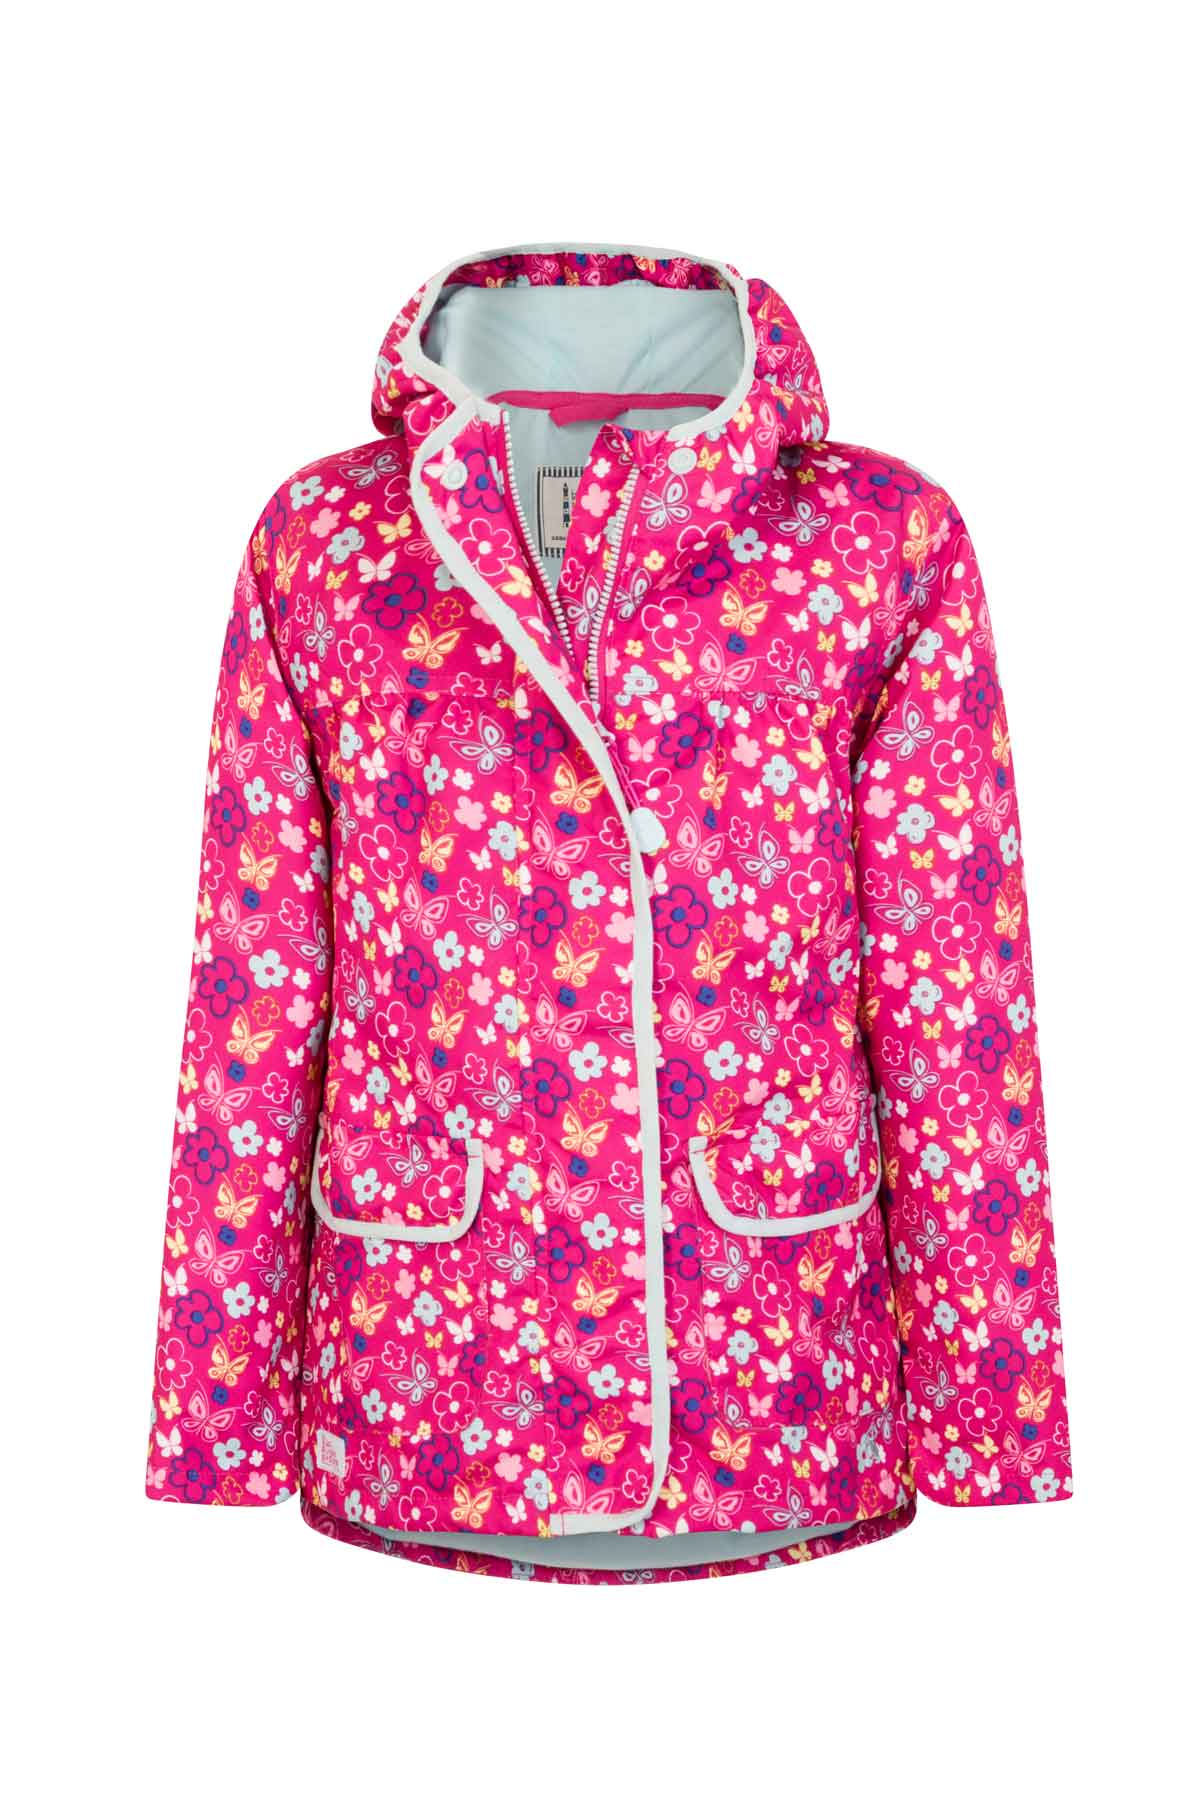 girls waterproof jacket uk